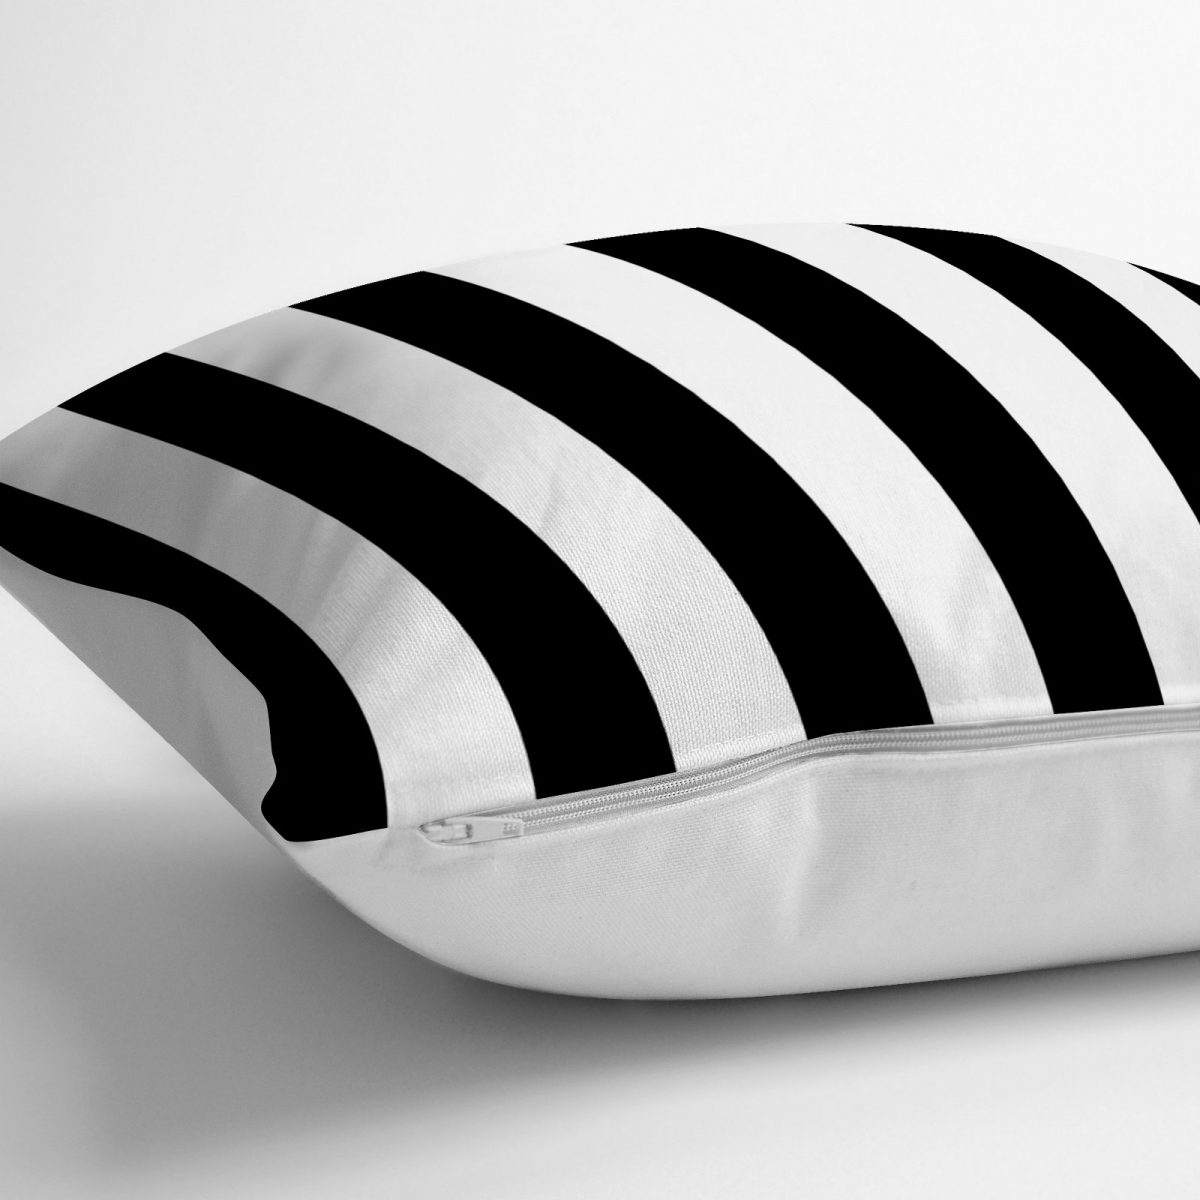 Siyah Beyaz Çizgili Dekoratif Yer Minderi - 70 x 70 cm Realhomes